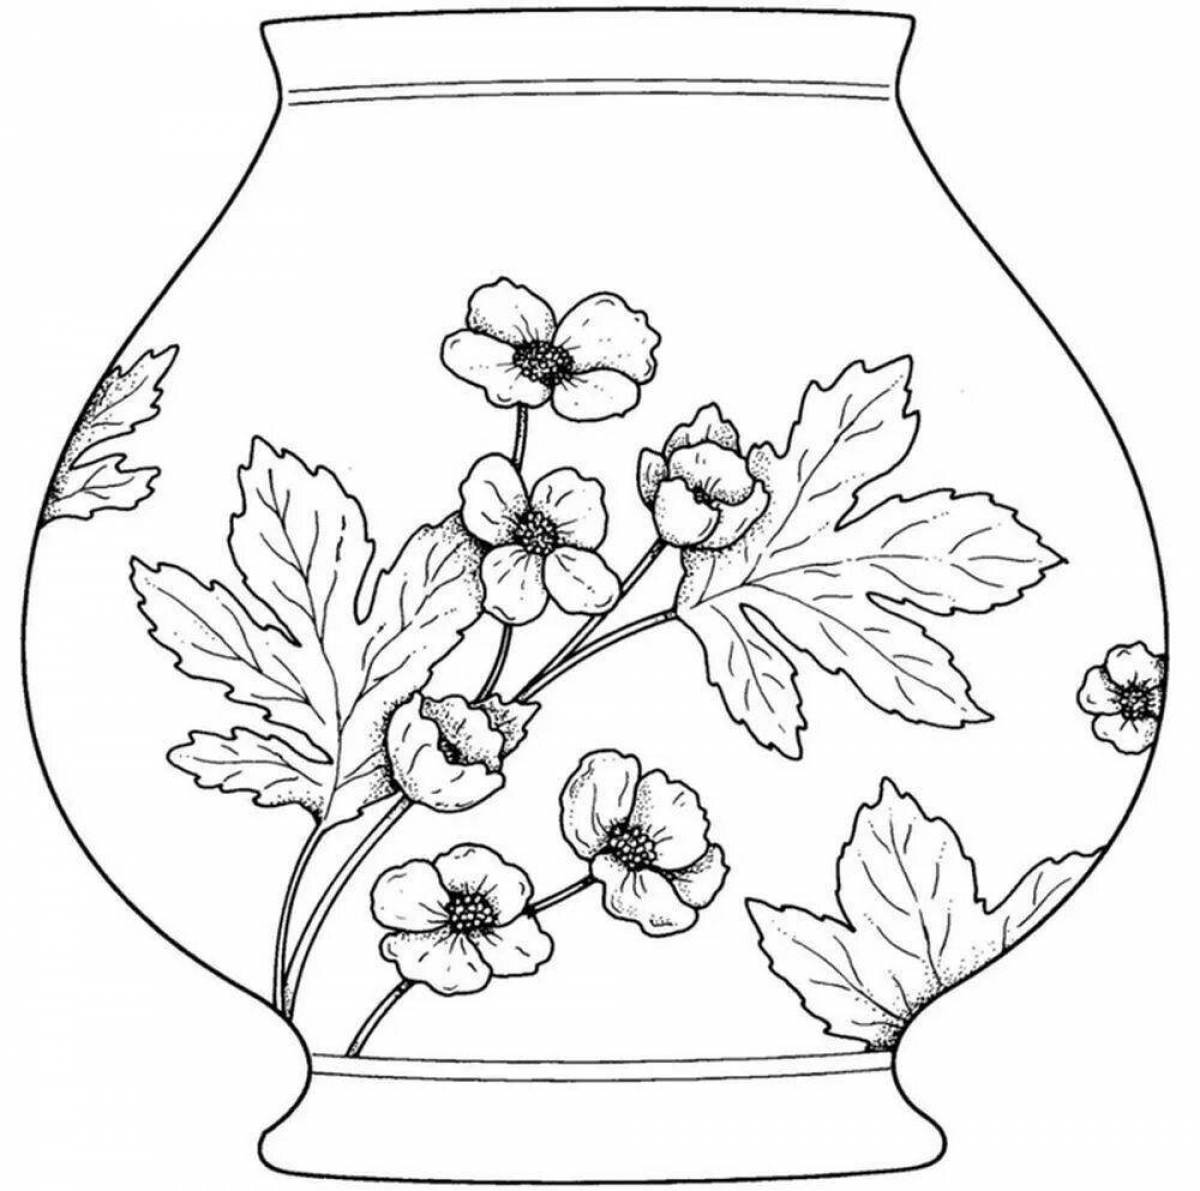 Luminous vase coloring page